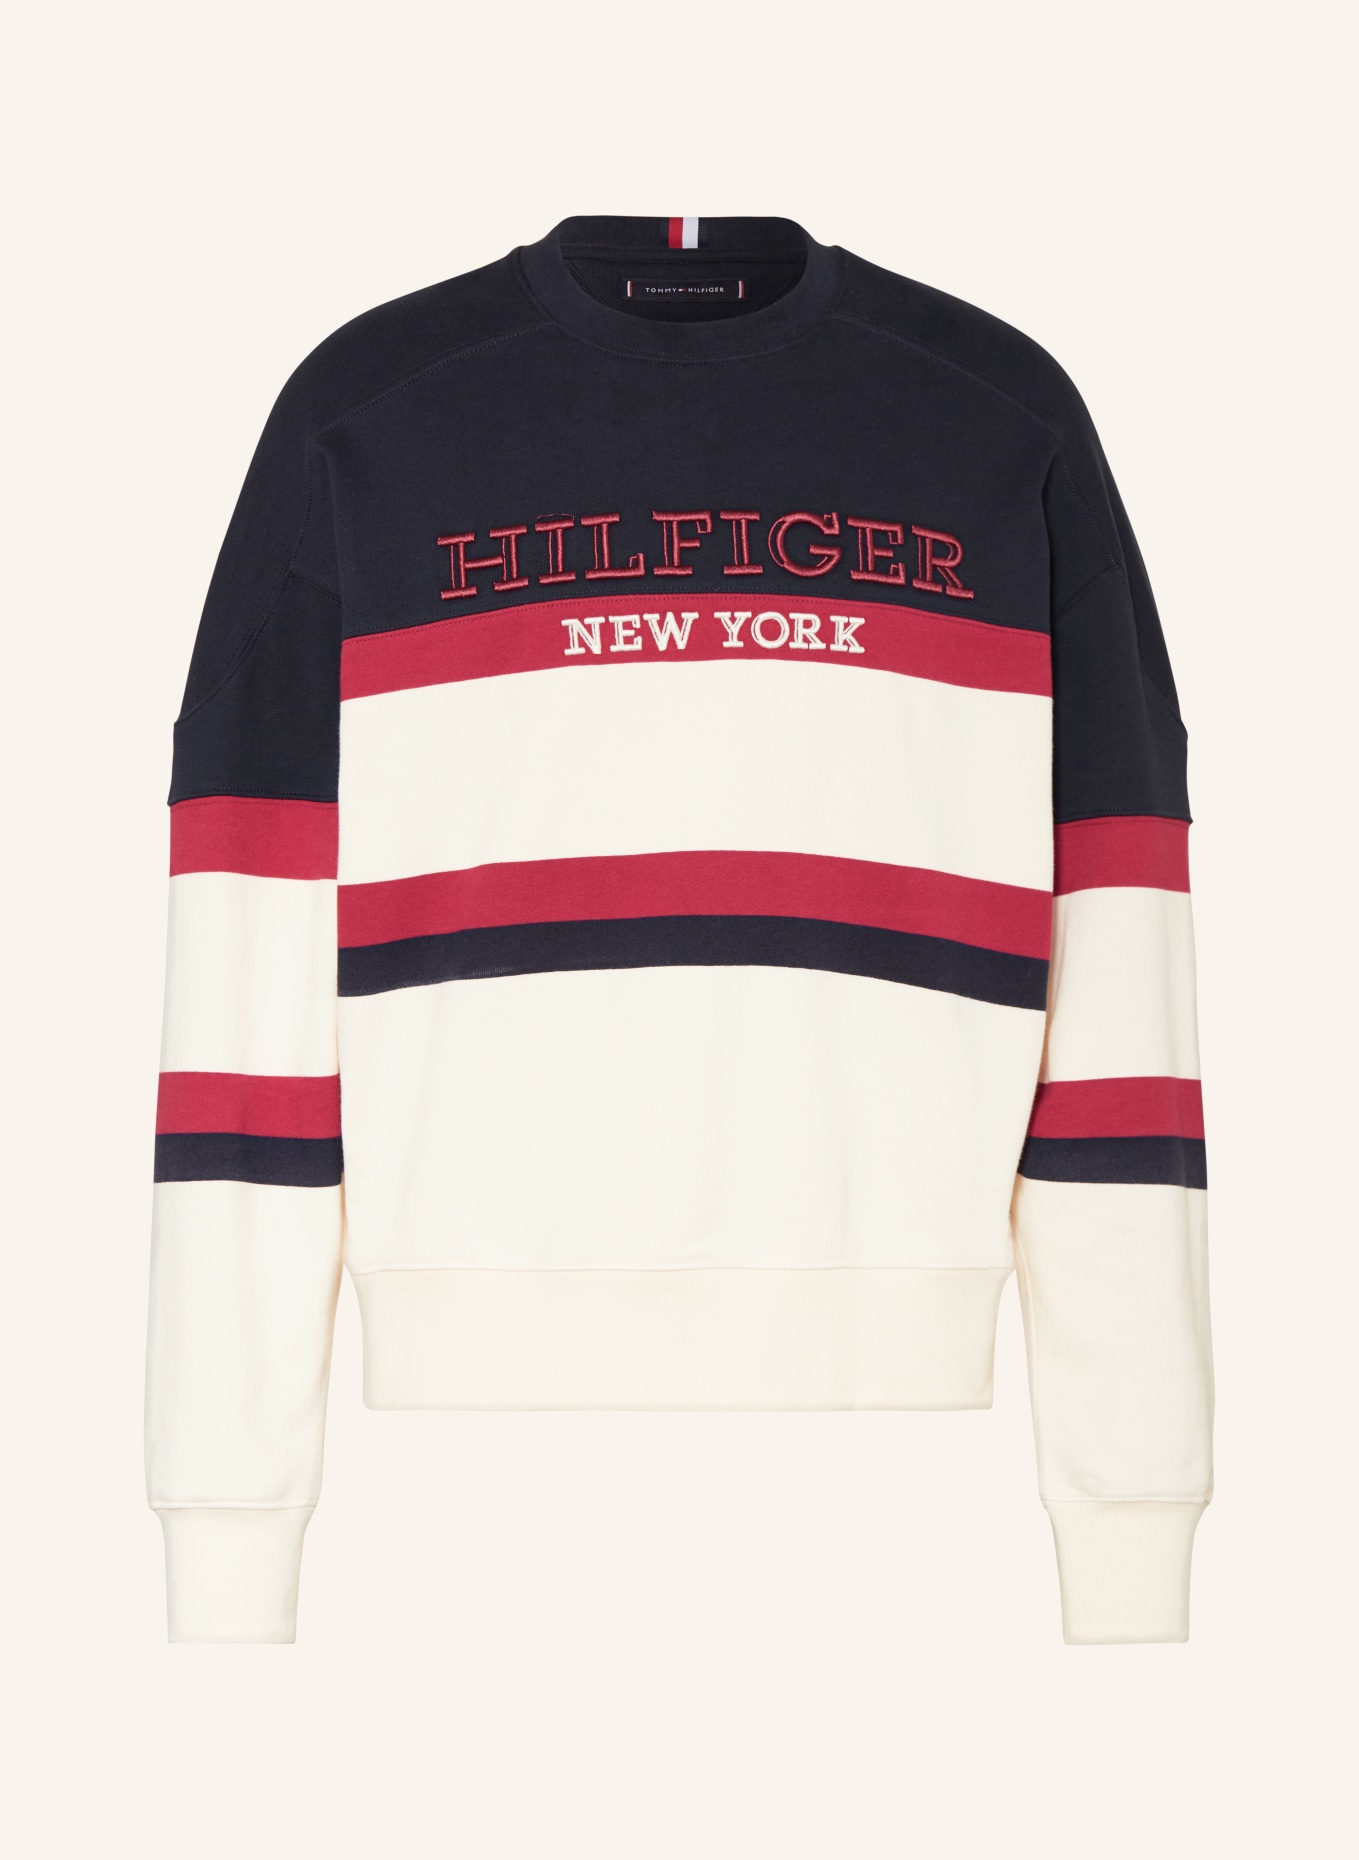 TOMMY HILFIGER Sweatshirt, Farbe: DUNKELBLAU/ DUNKELROT/ ECRU (Bild 1)